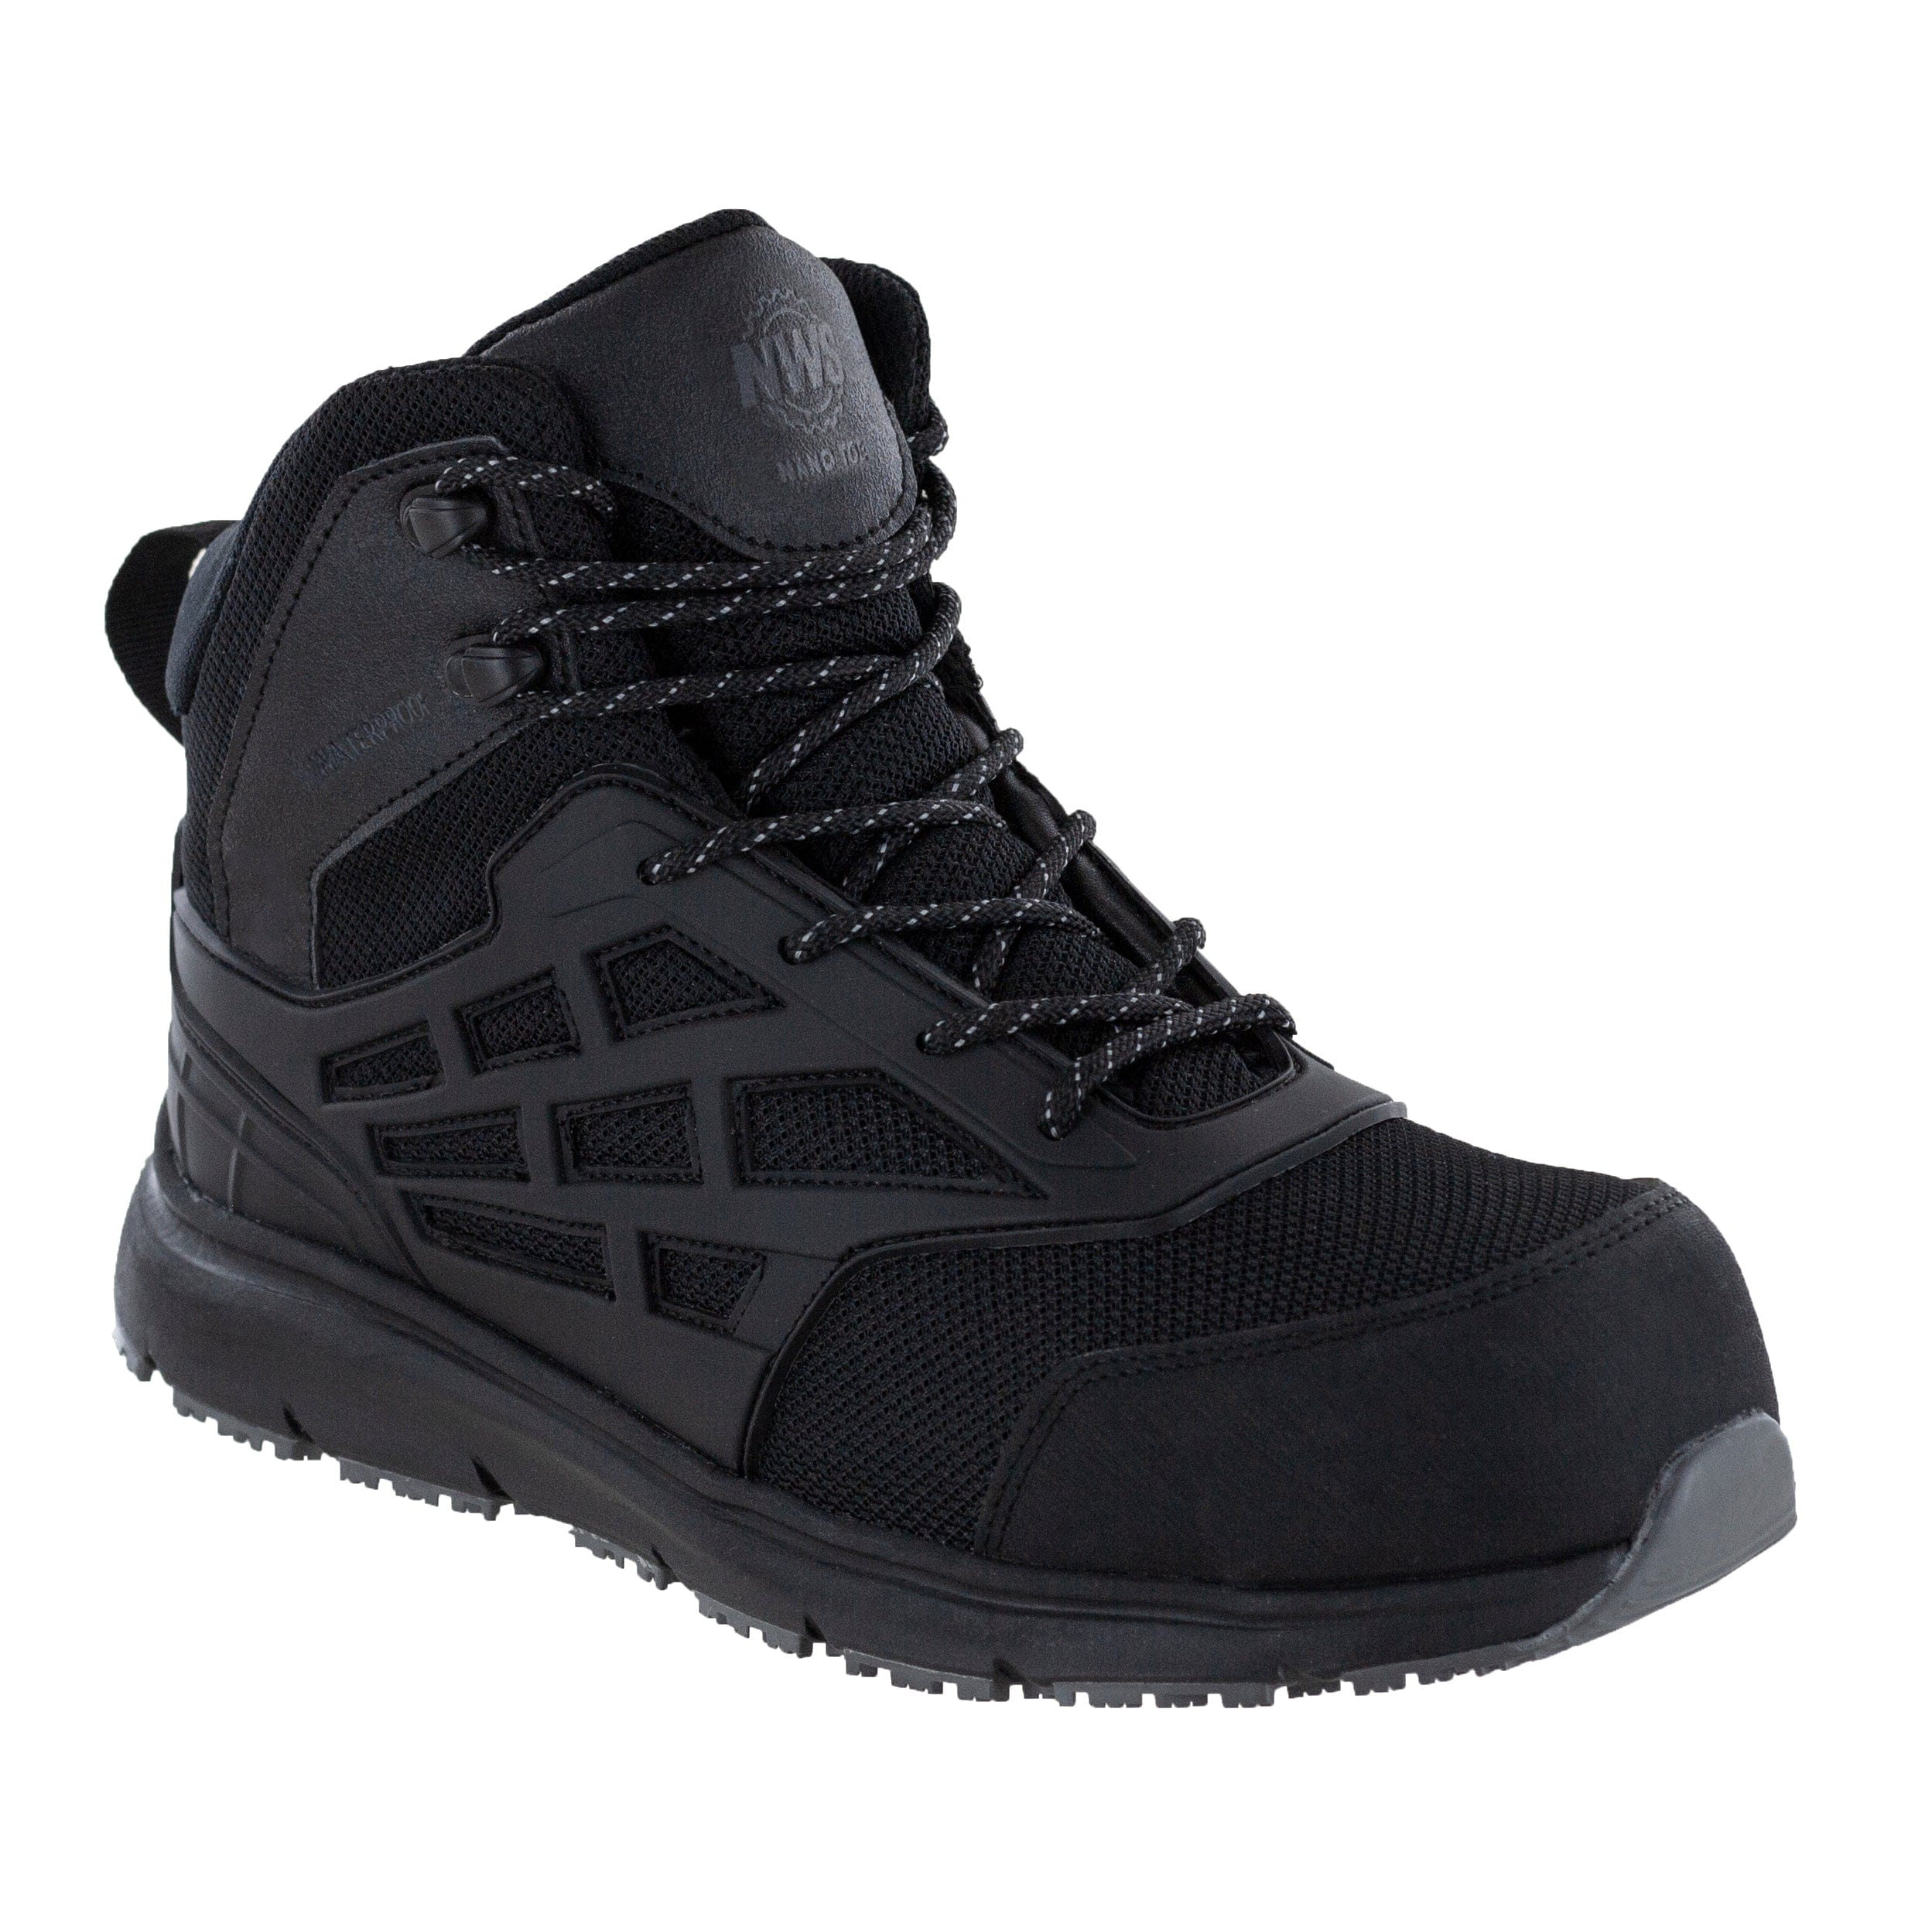 Durable waterproof carbon fiber toe work boots for men